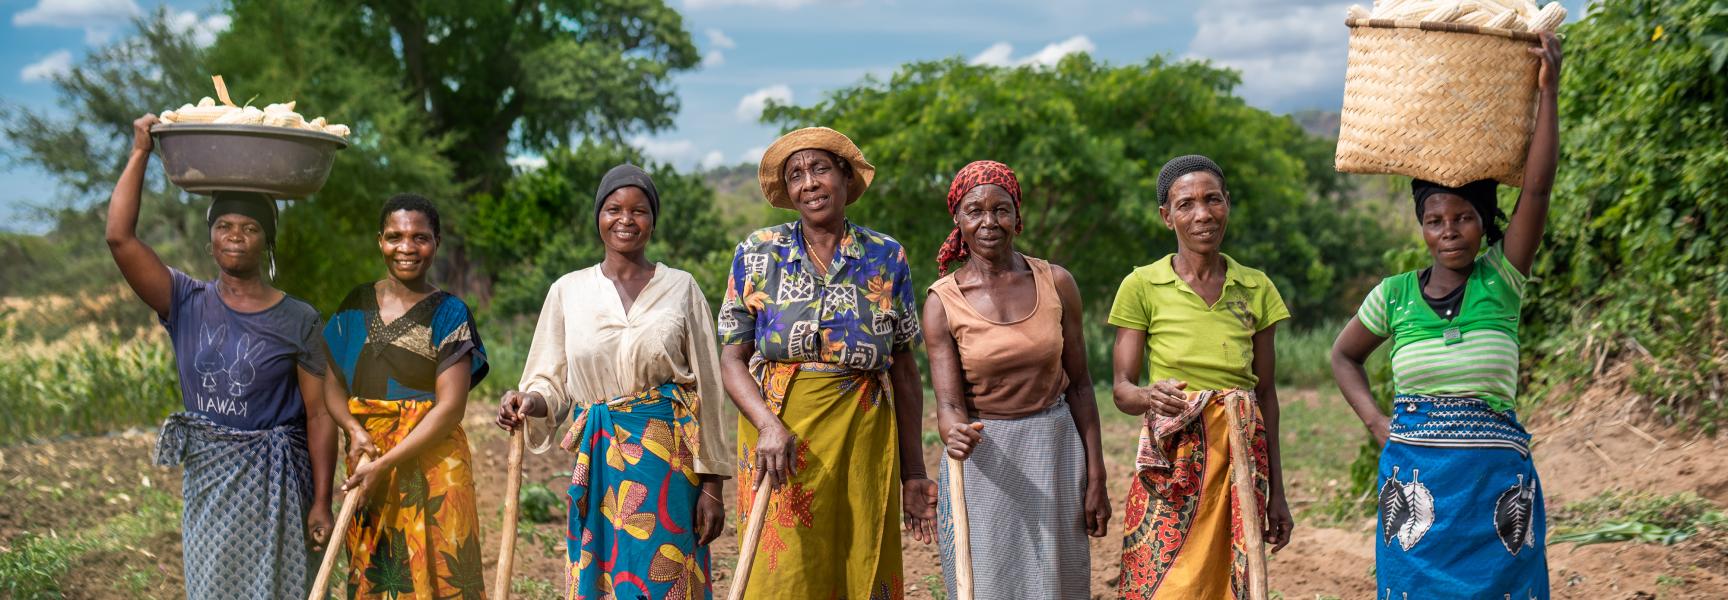 Mujeres agricultoras en Malawi